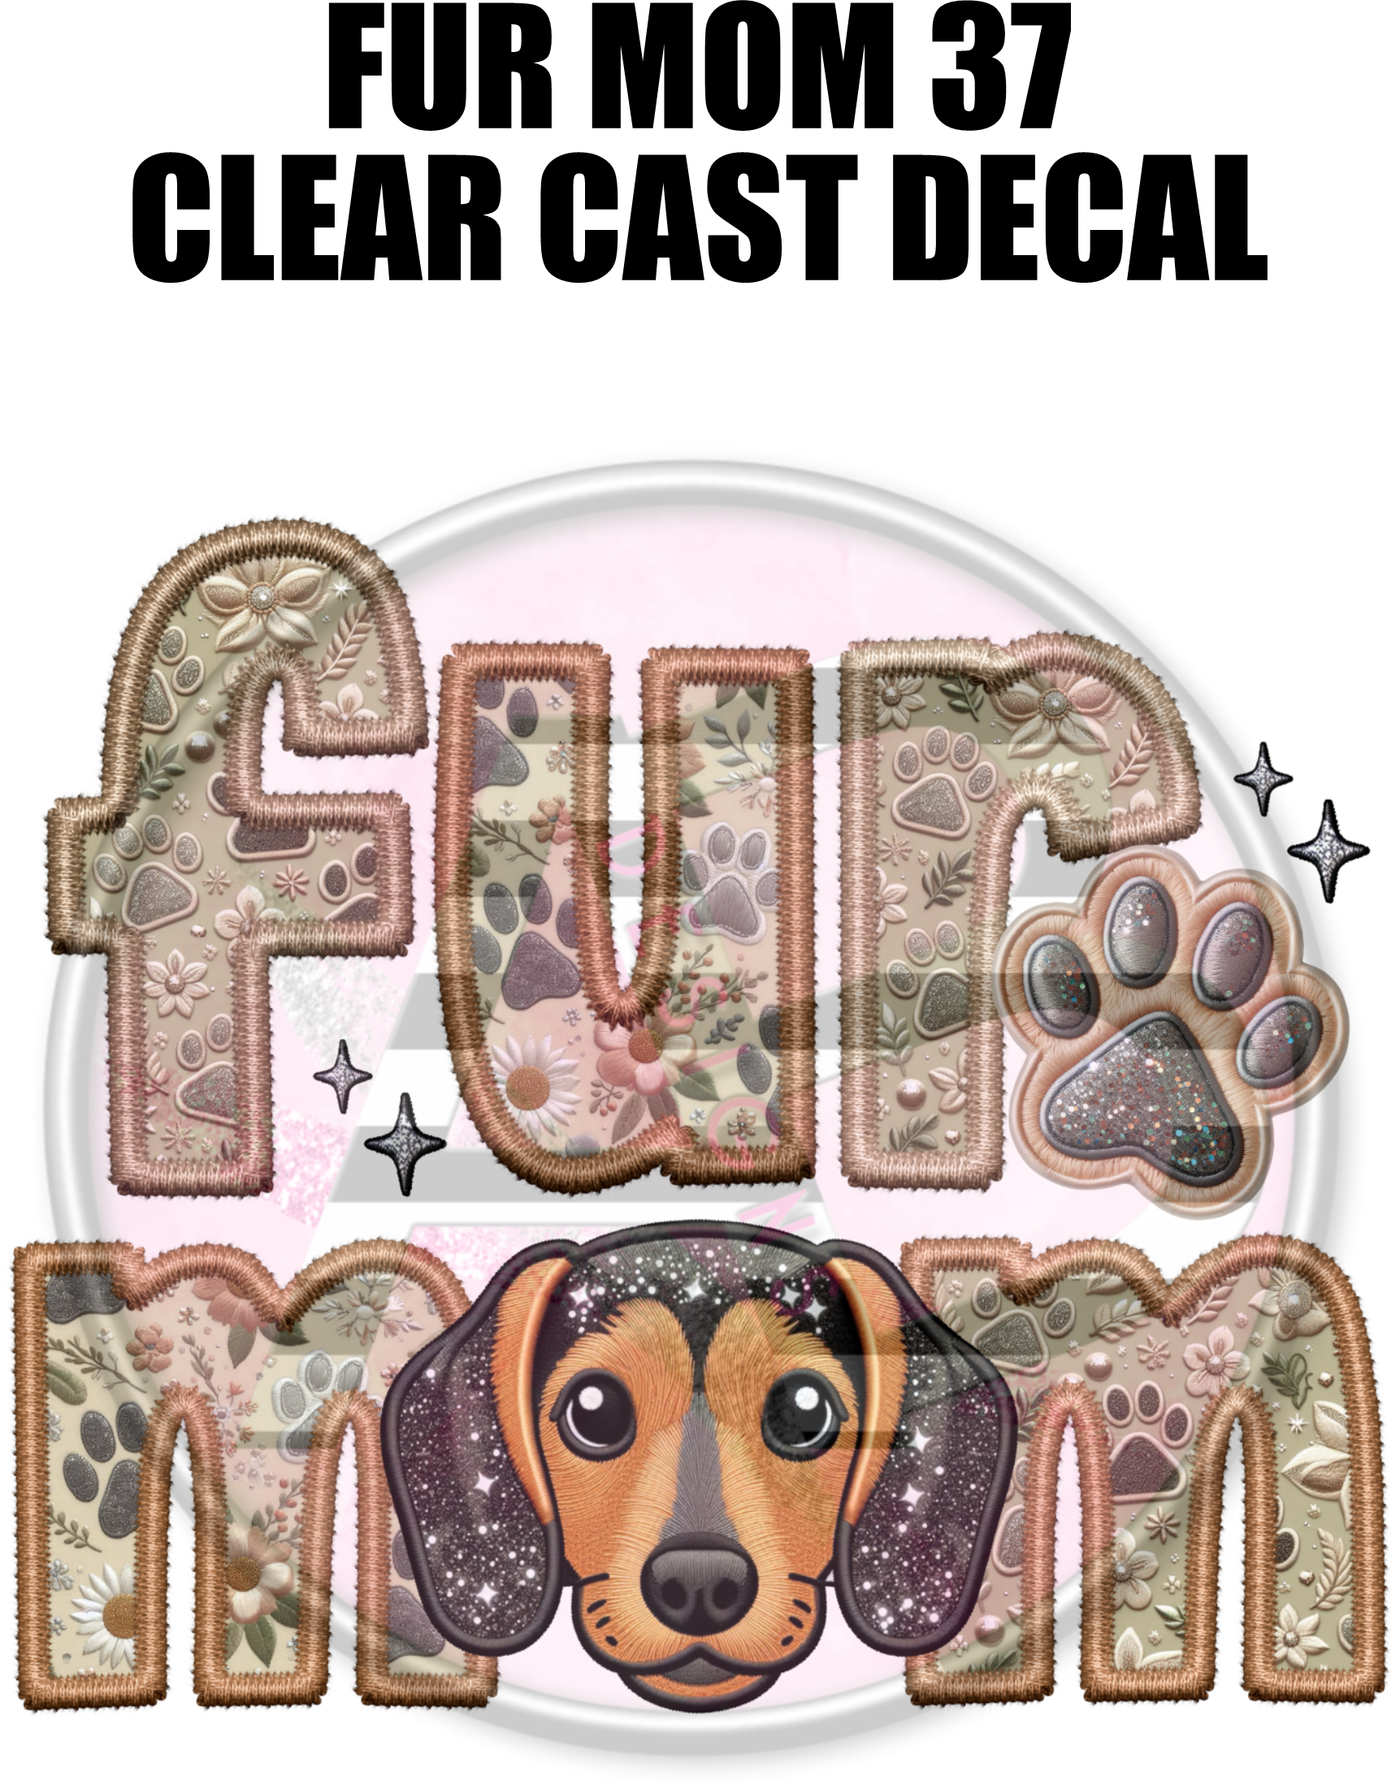 Fur Mom 37 - Clear Cast Decal